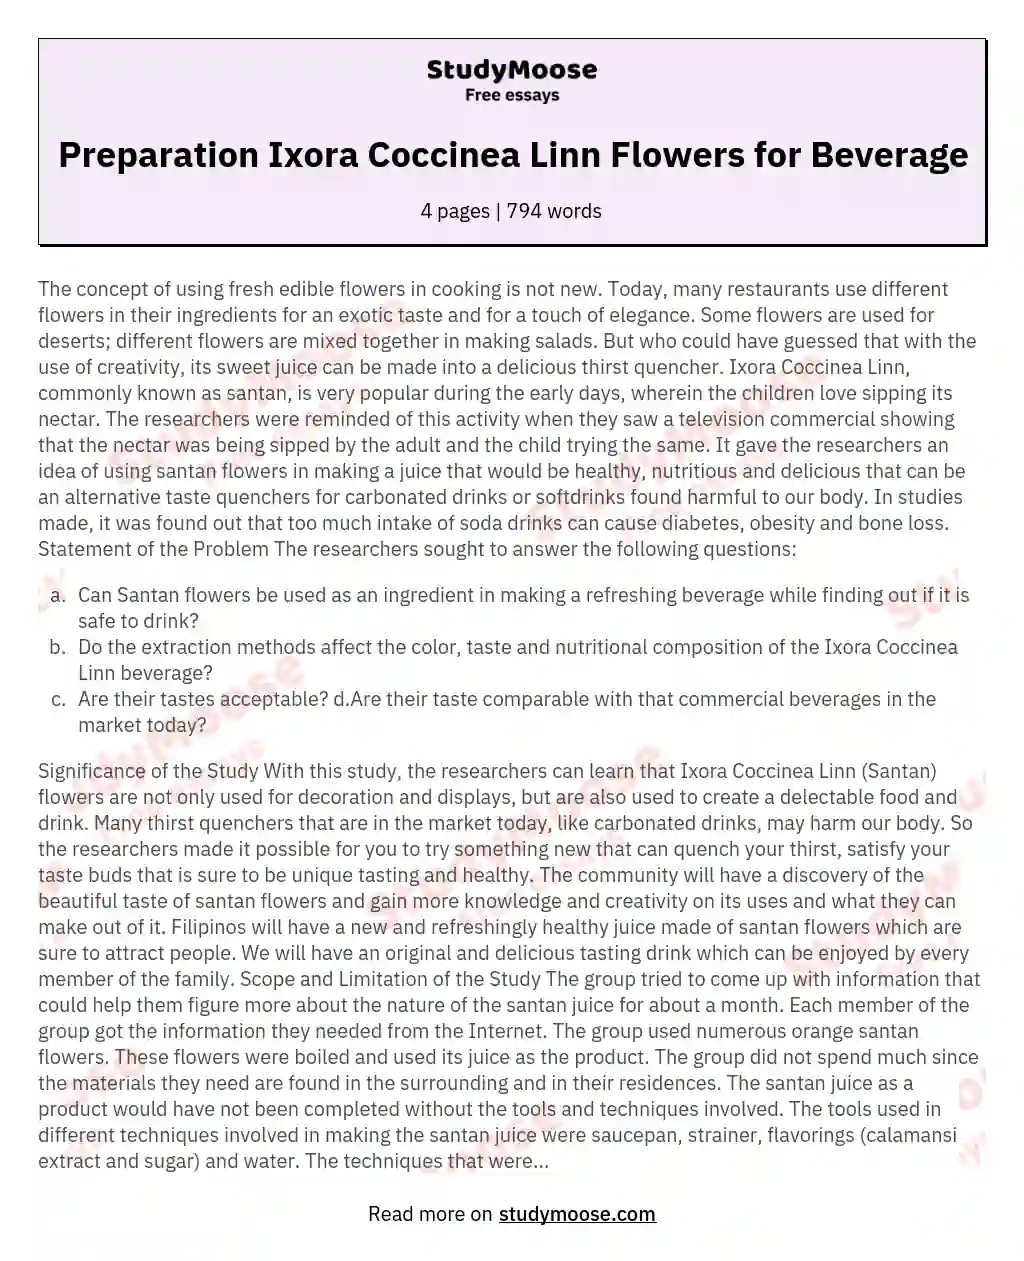 Preparation Ixora Coccinea Linn Flowers for Beverage